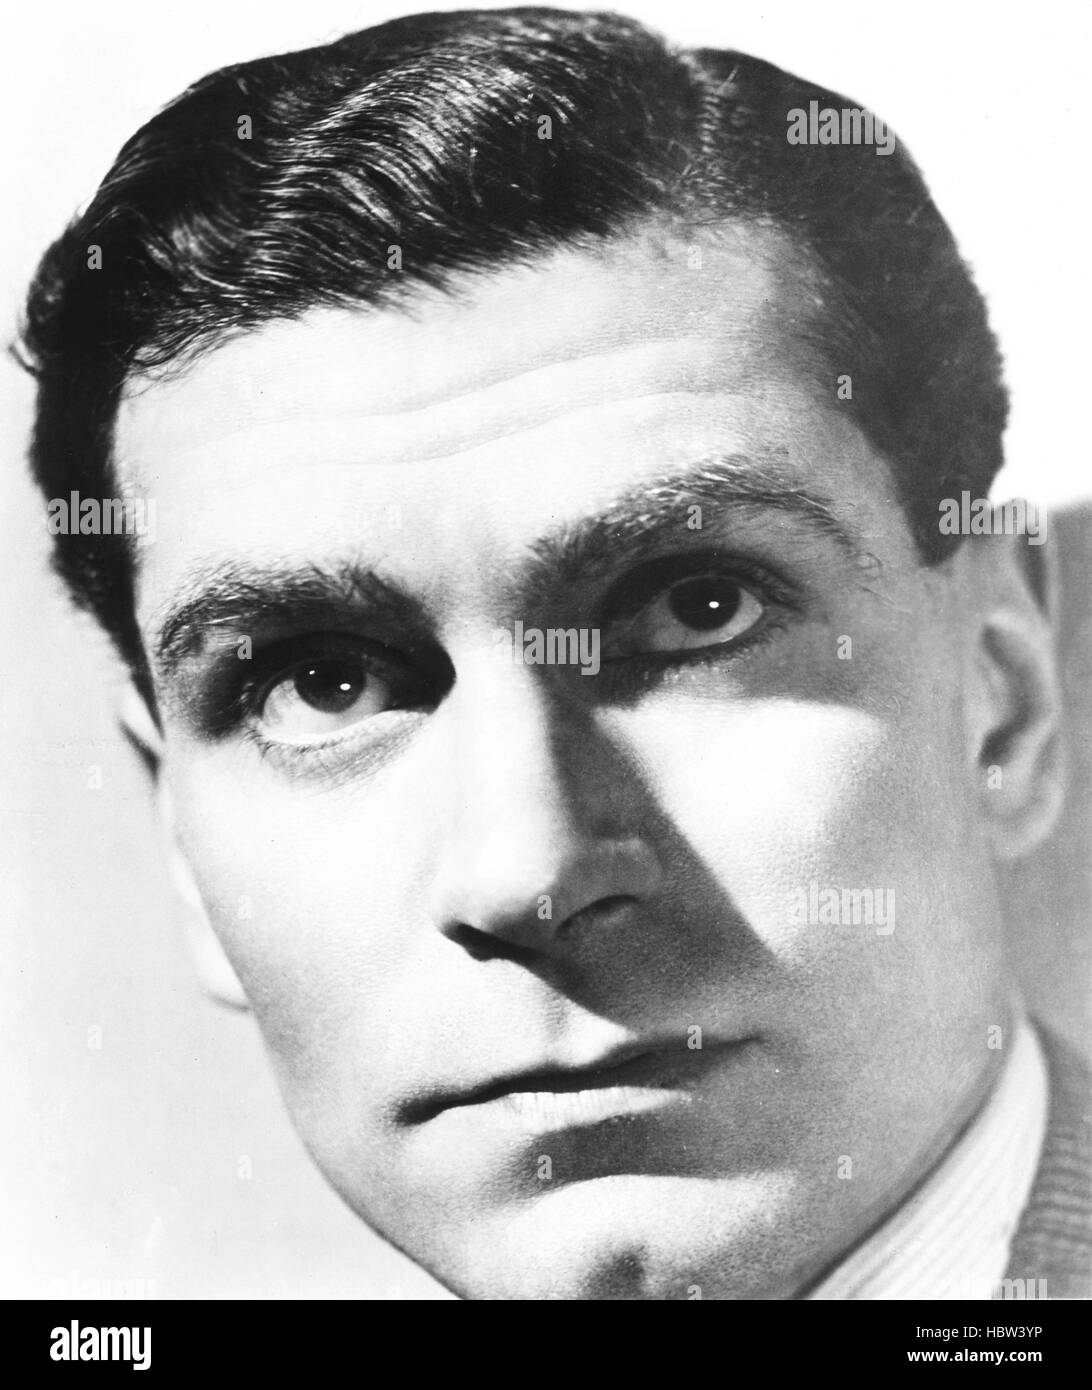 HENRY V, Laurence Olivier, 1944 Stock Photo - Alamy